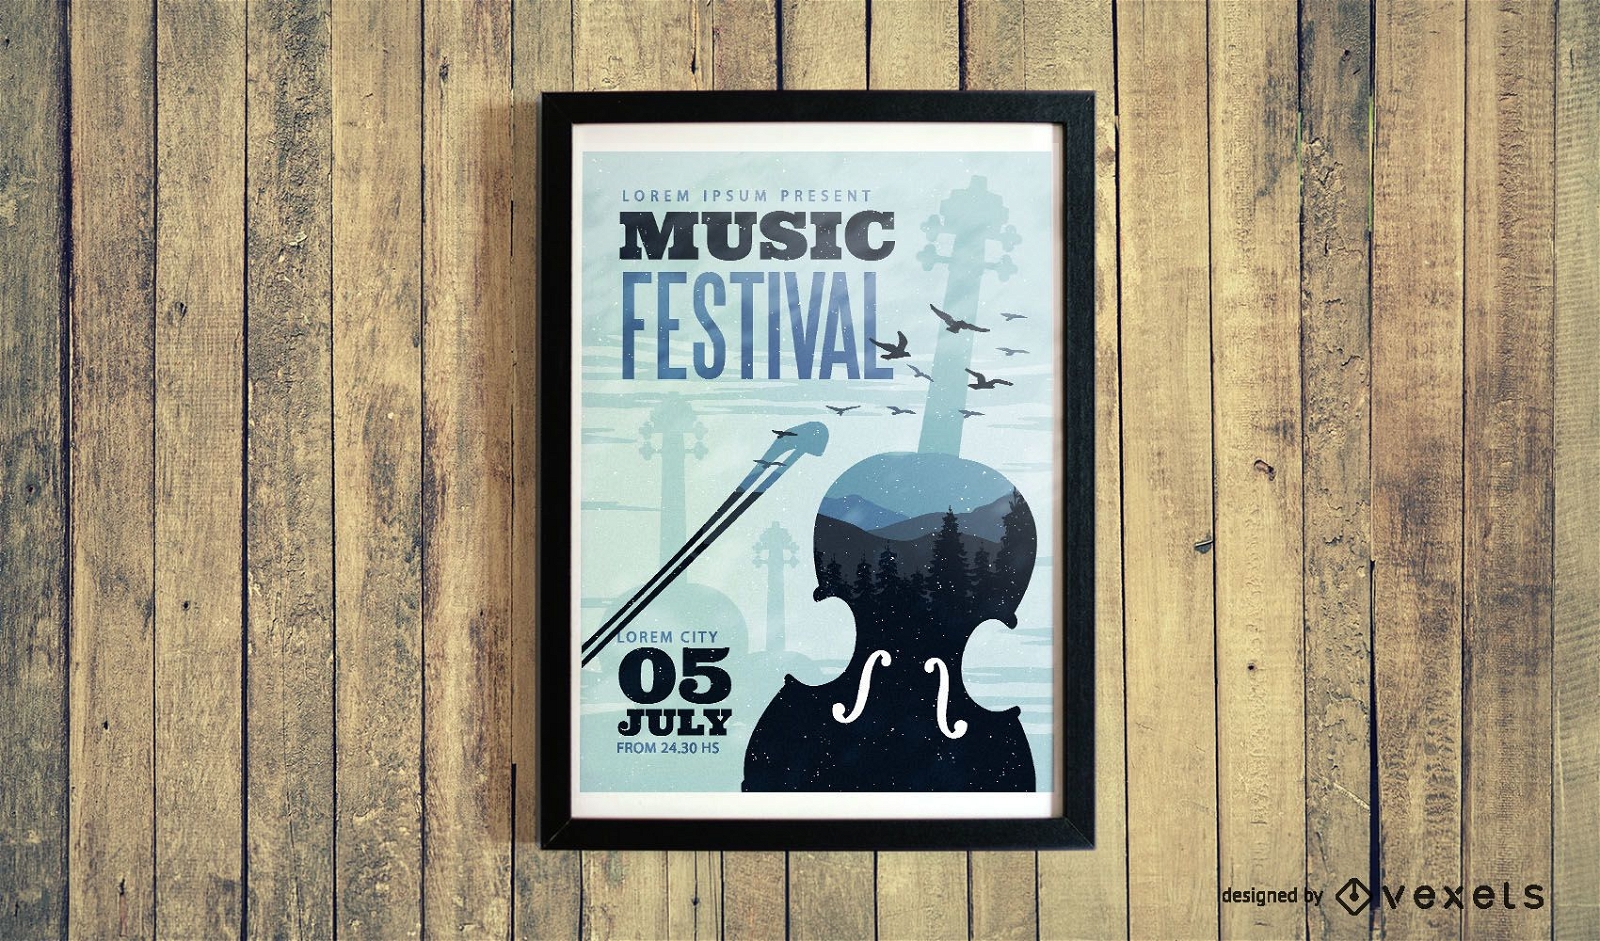 Classic music festival poster design